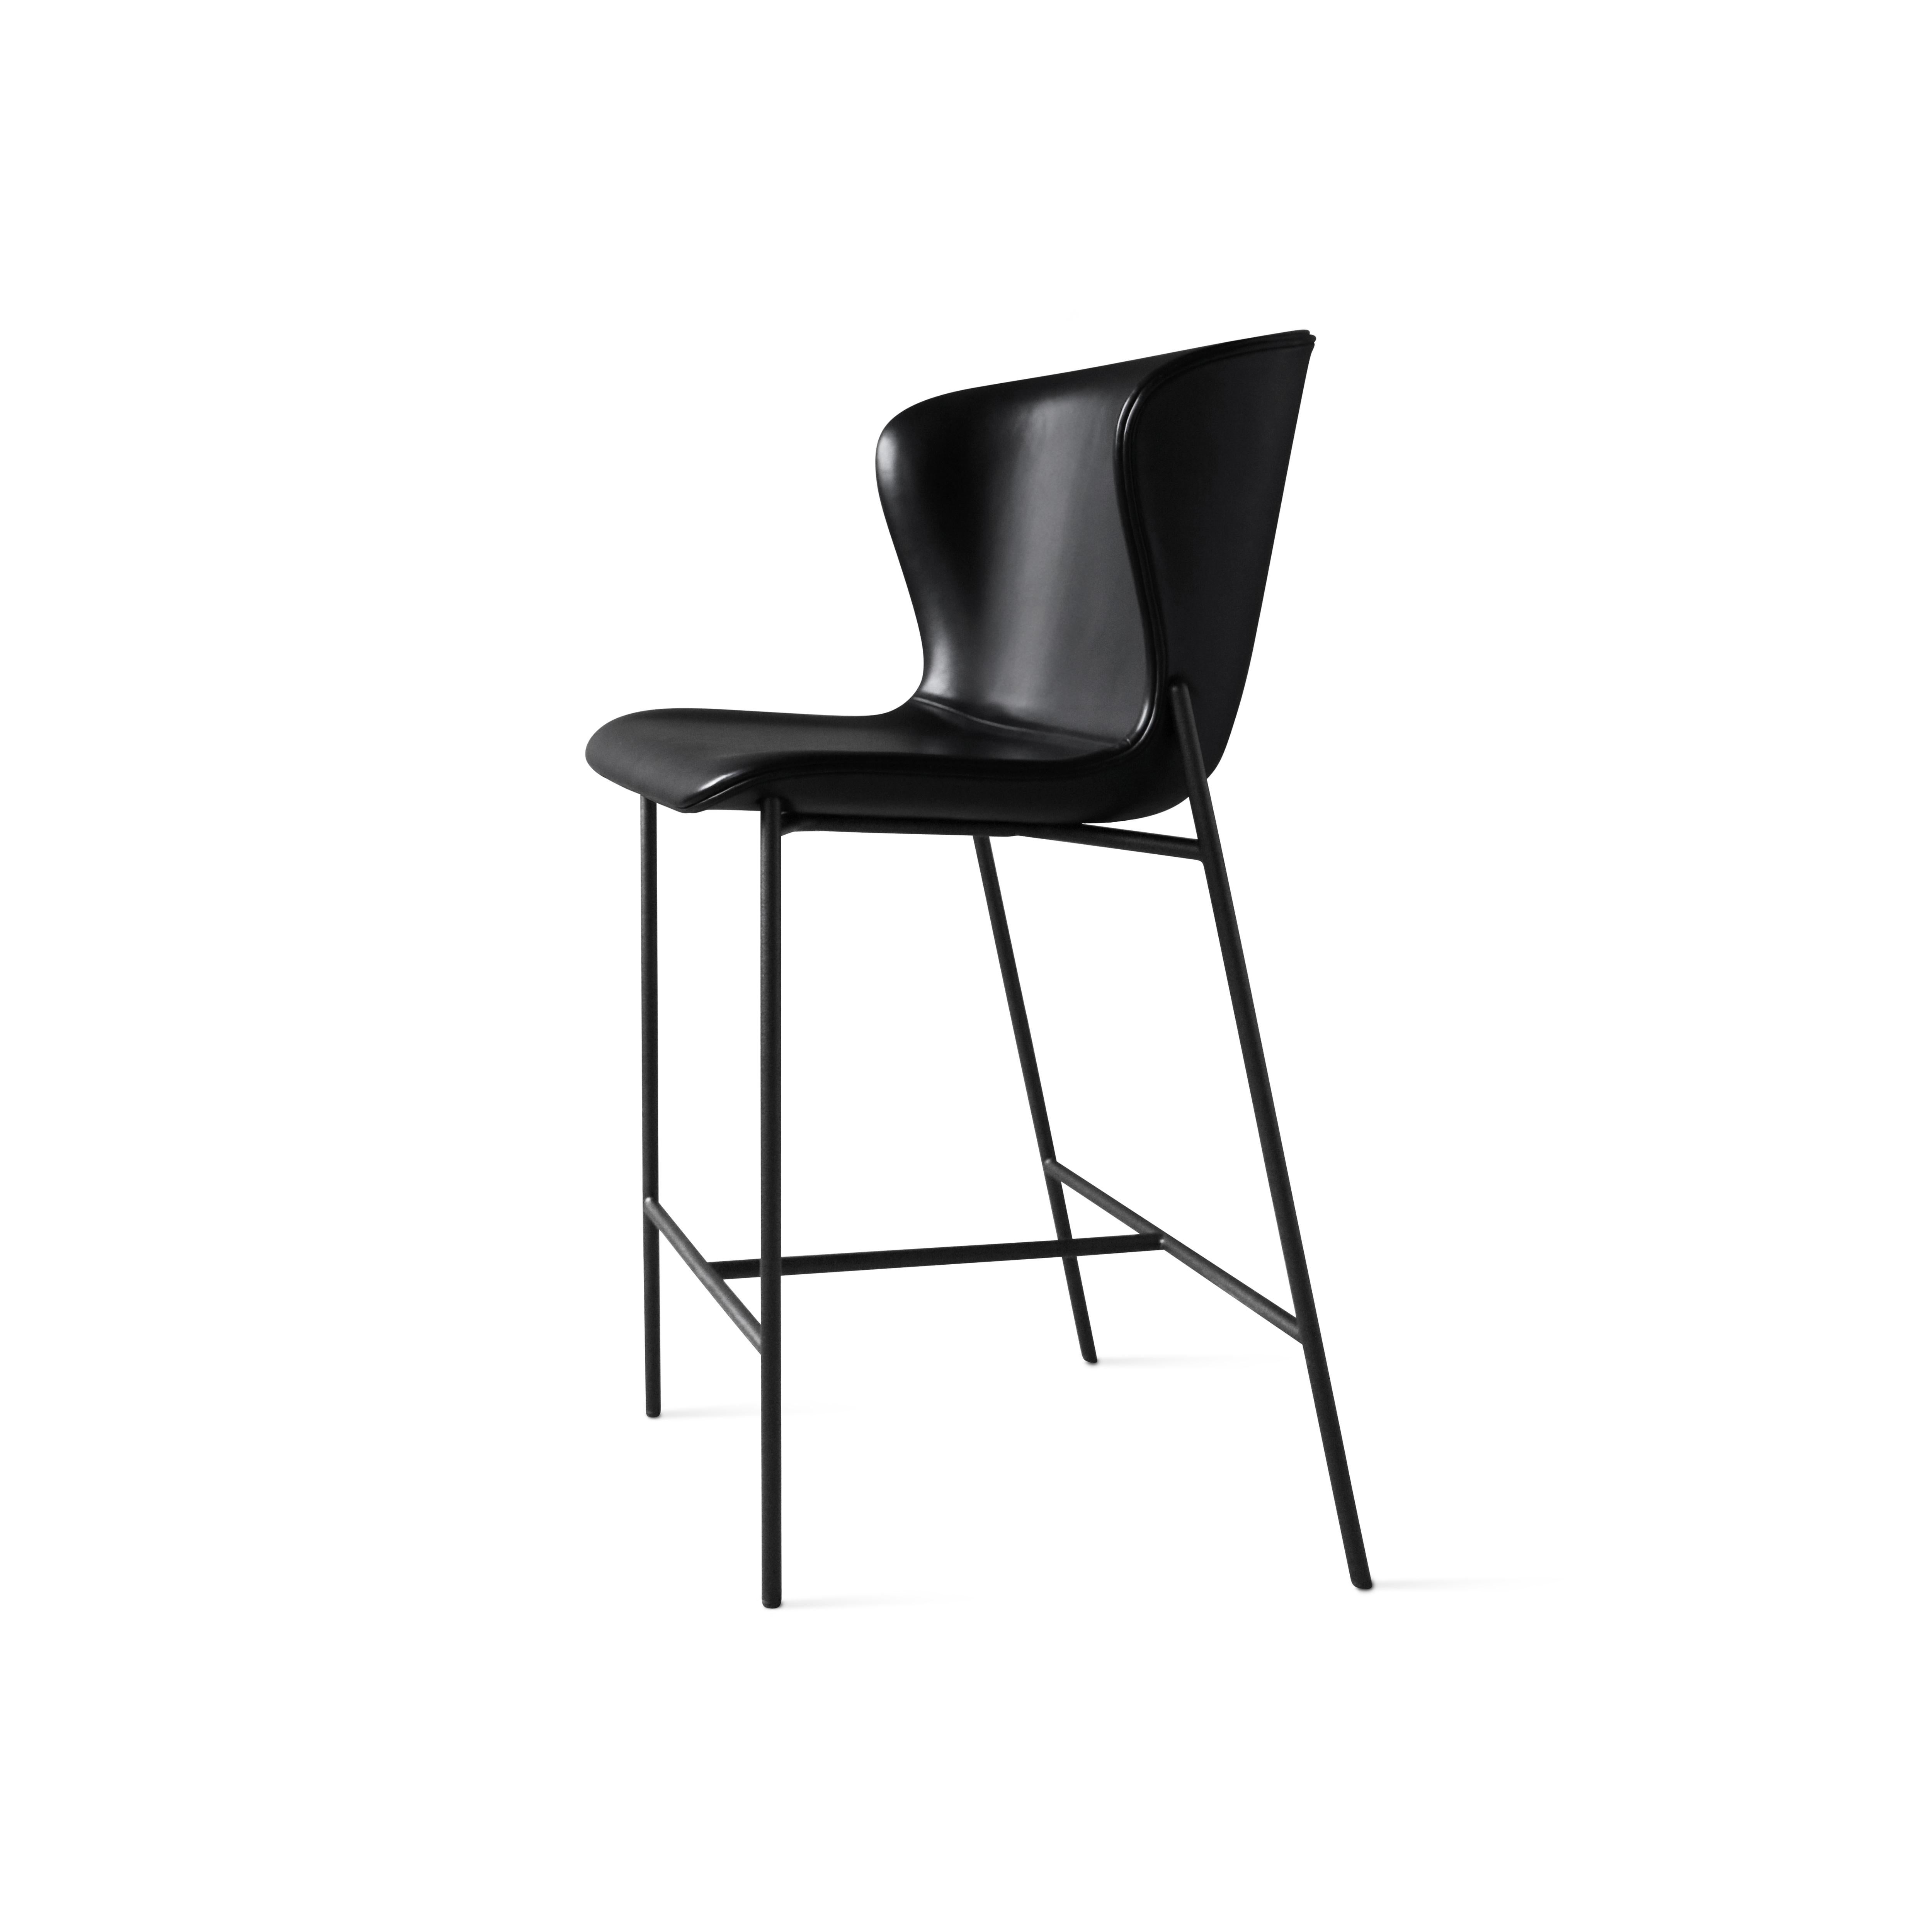 Organic Modern Contemporary Counter Chair 'Pipe' Black Leather Dakar, Black Legs For Sale